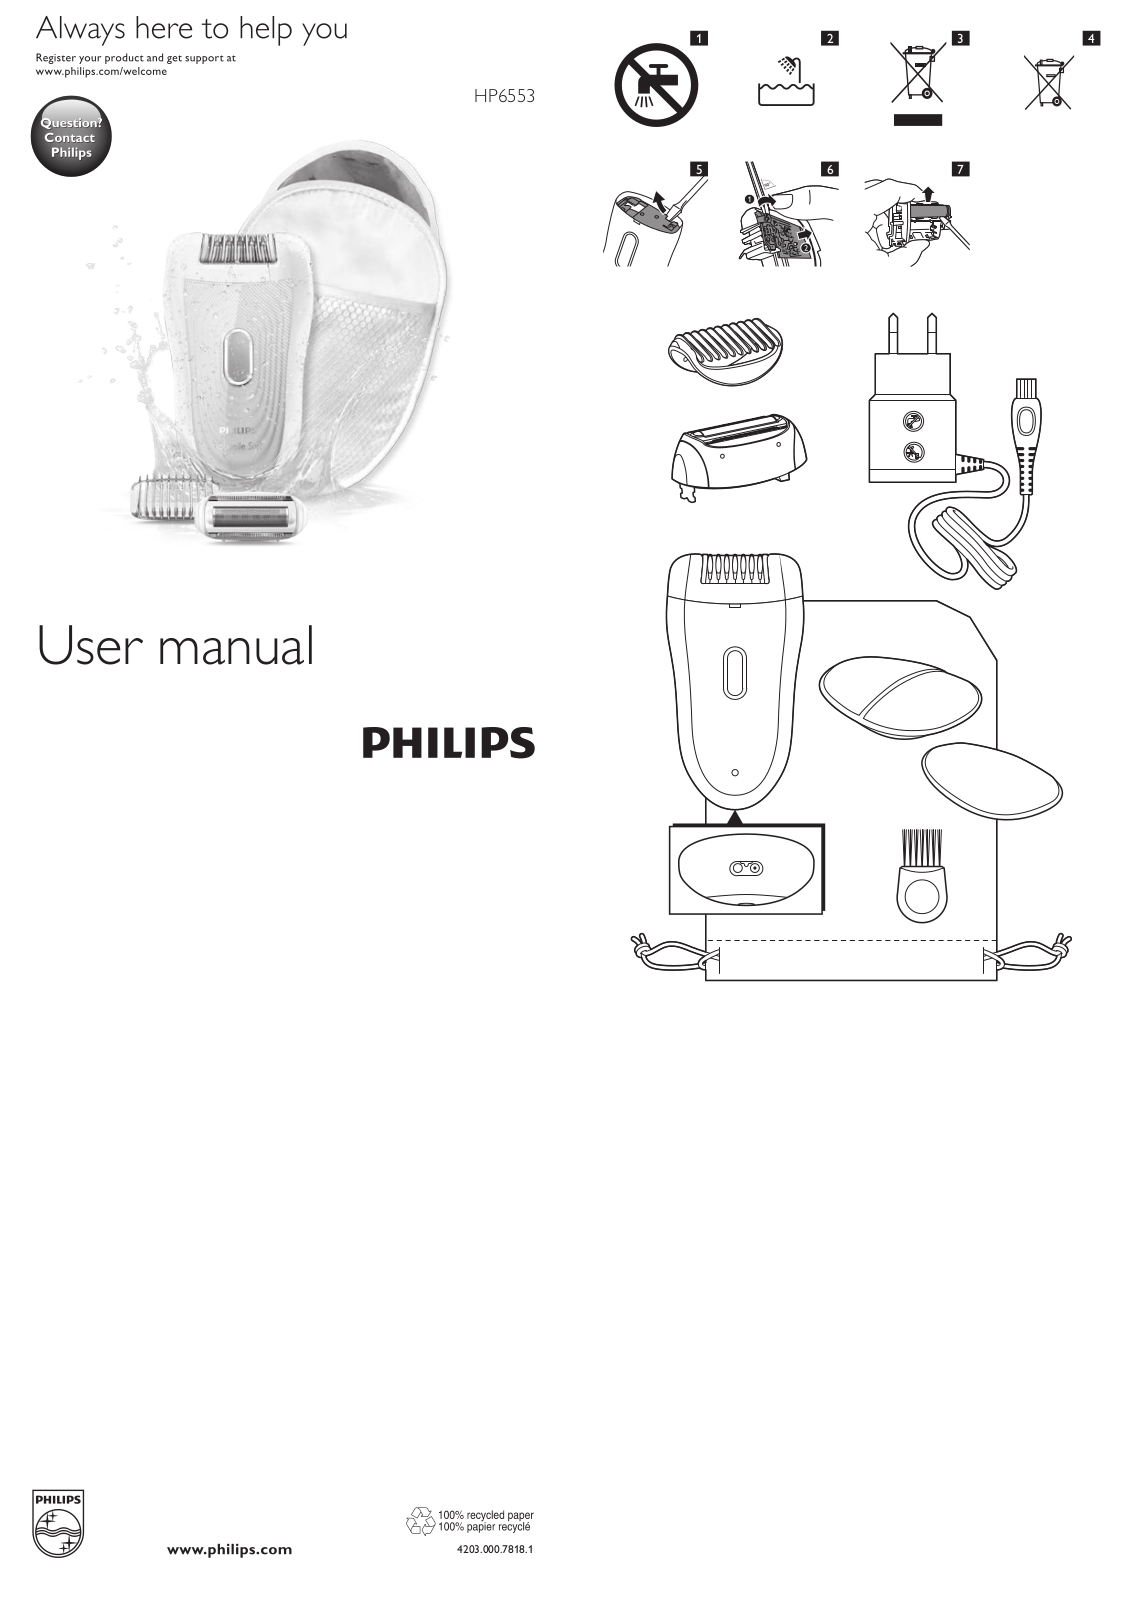 Philips Sanftes Epilationsset. User Manual